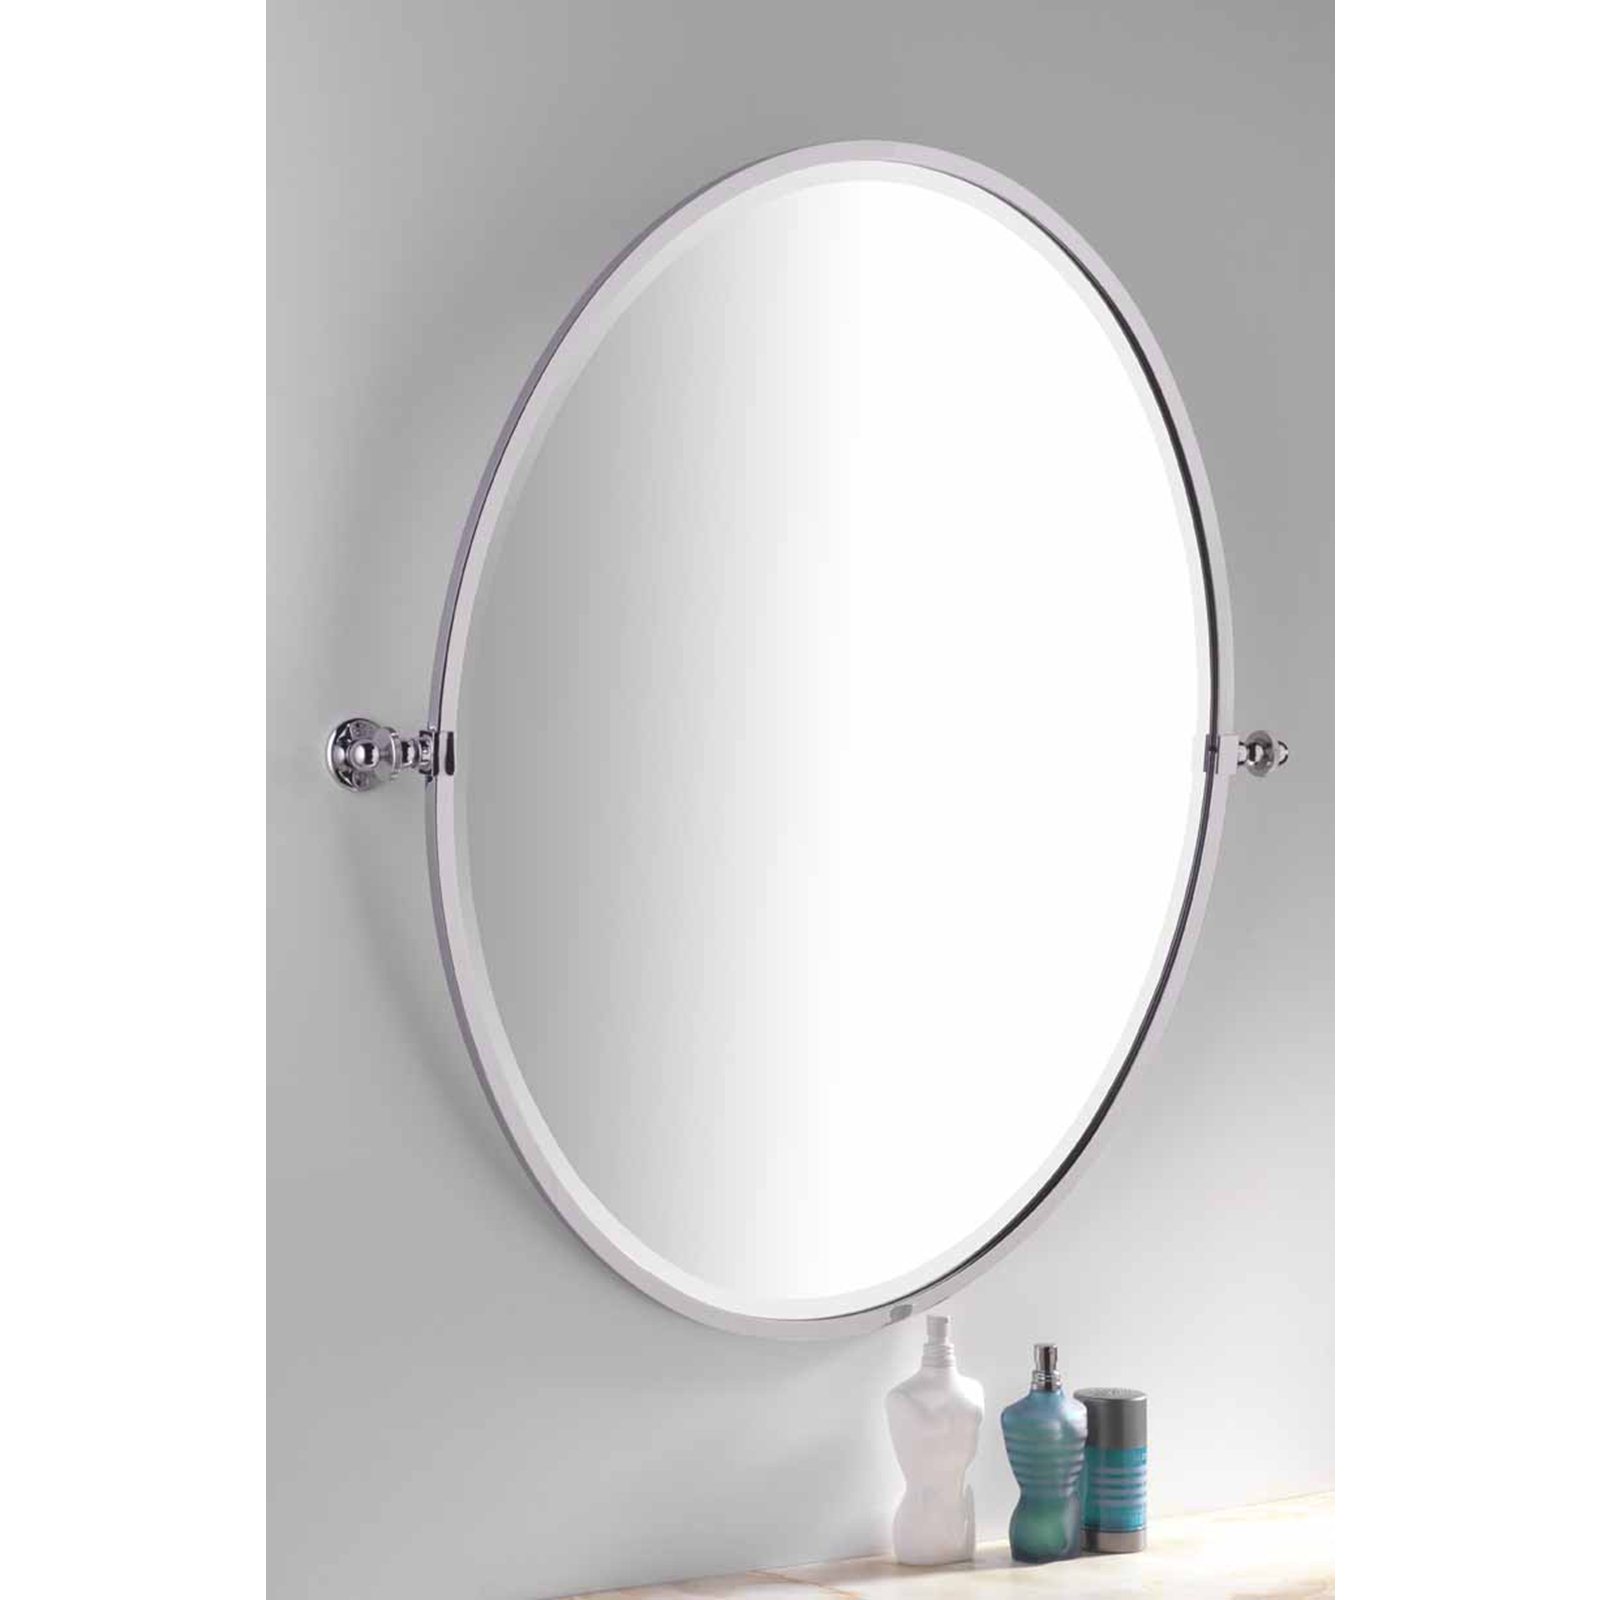 Handmade Bathroom Oval Framed Tilting, Silver Framed Oval Bathroom Mirror